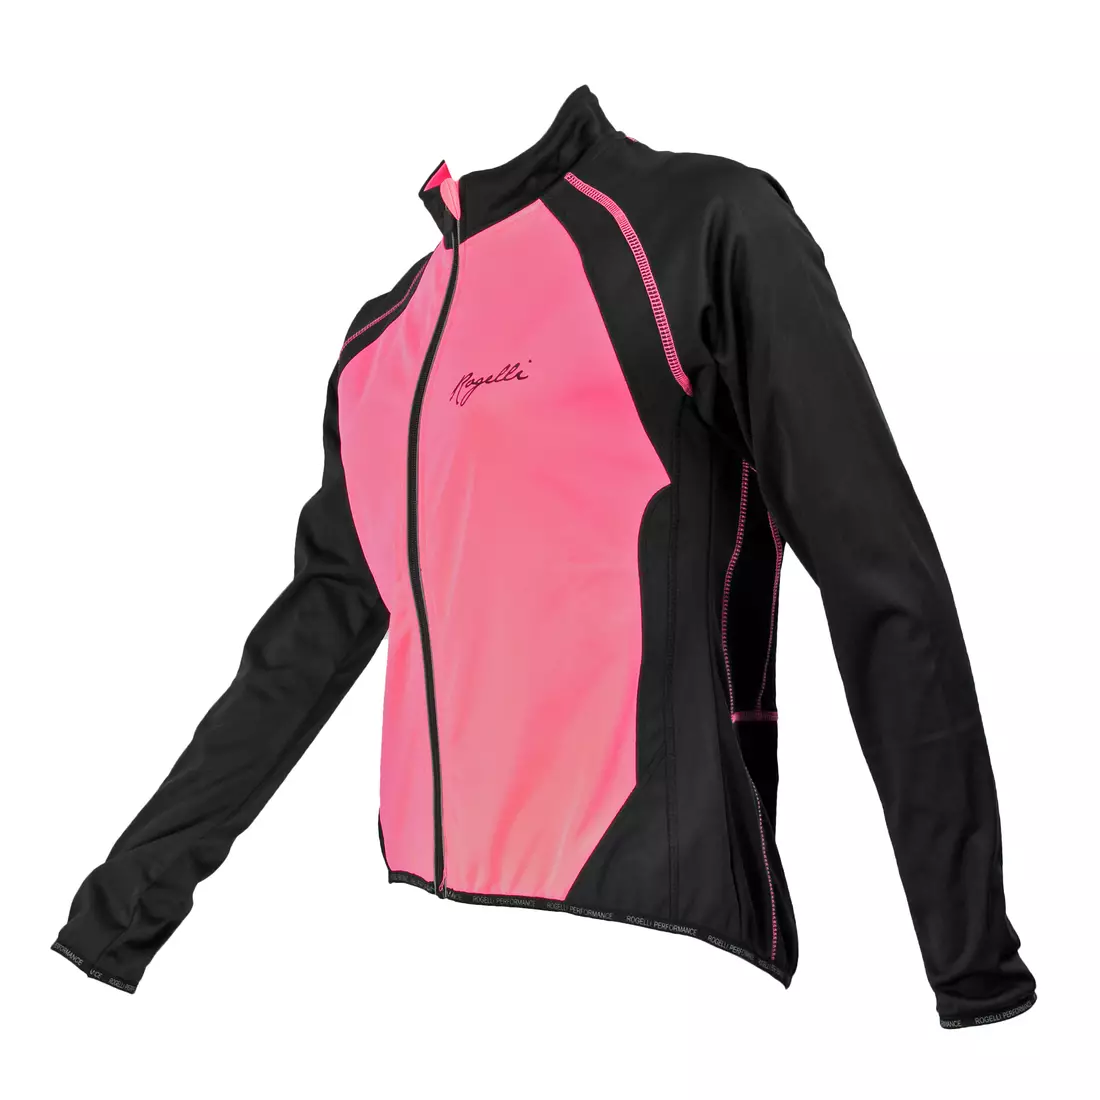 ROGELLI BICE - dámska Softshellová cyklistická bunda, farba: Ružová